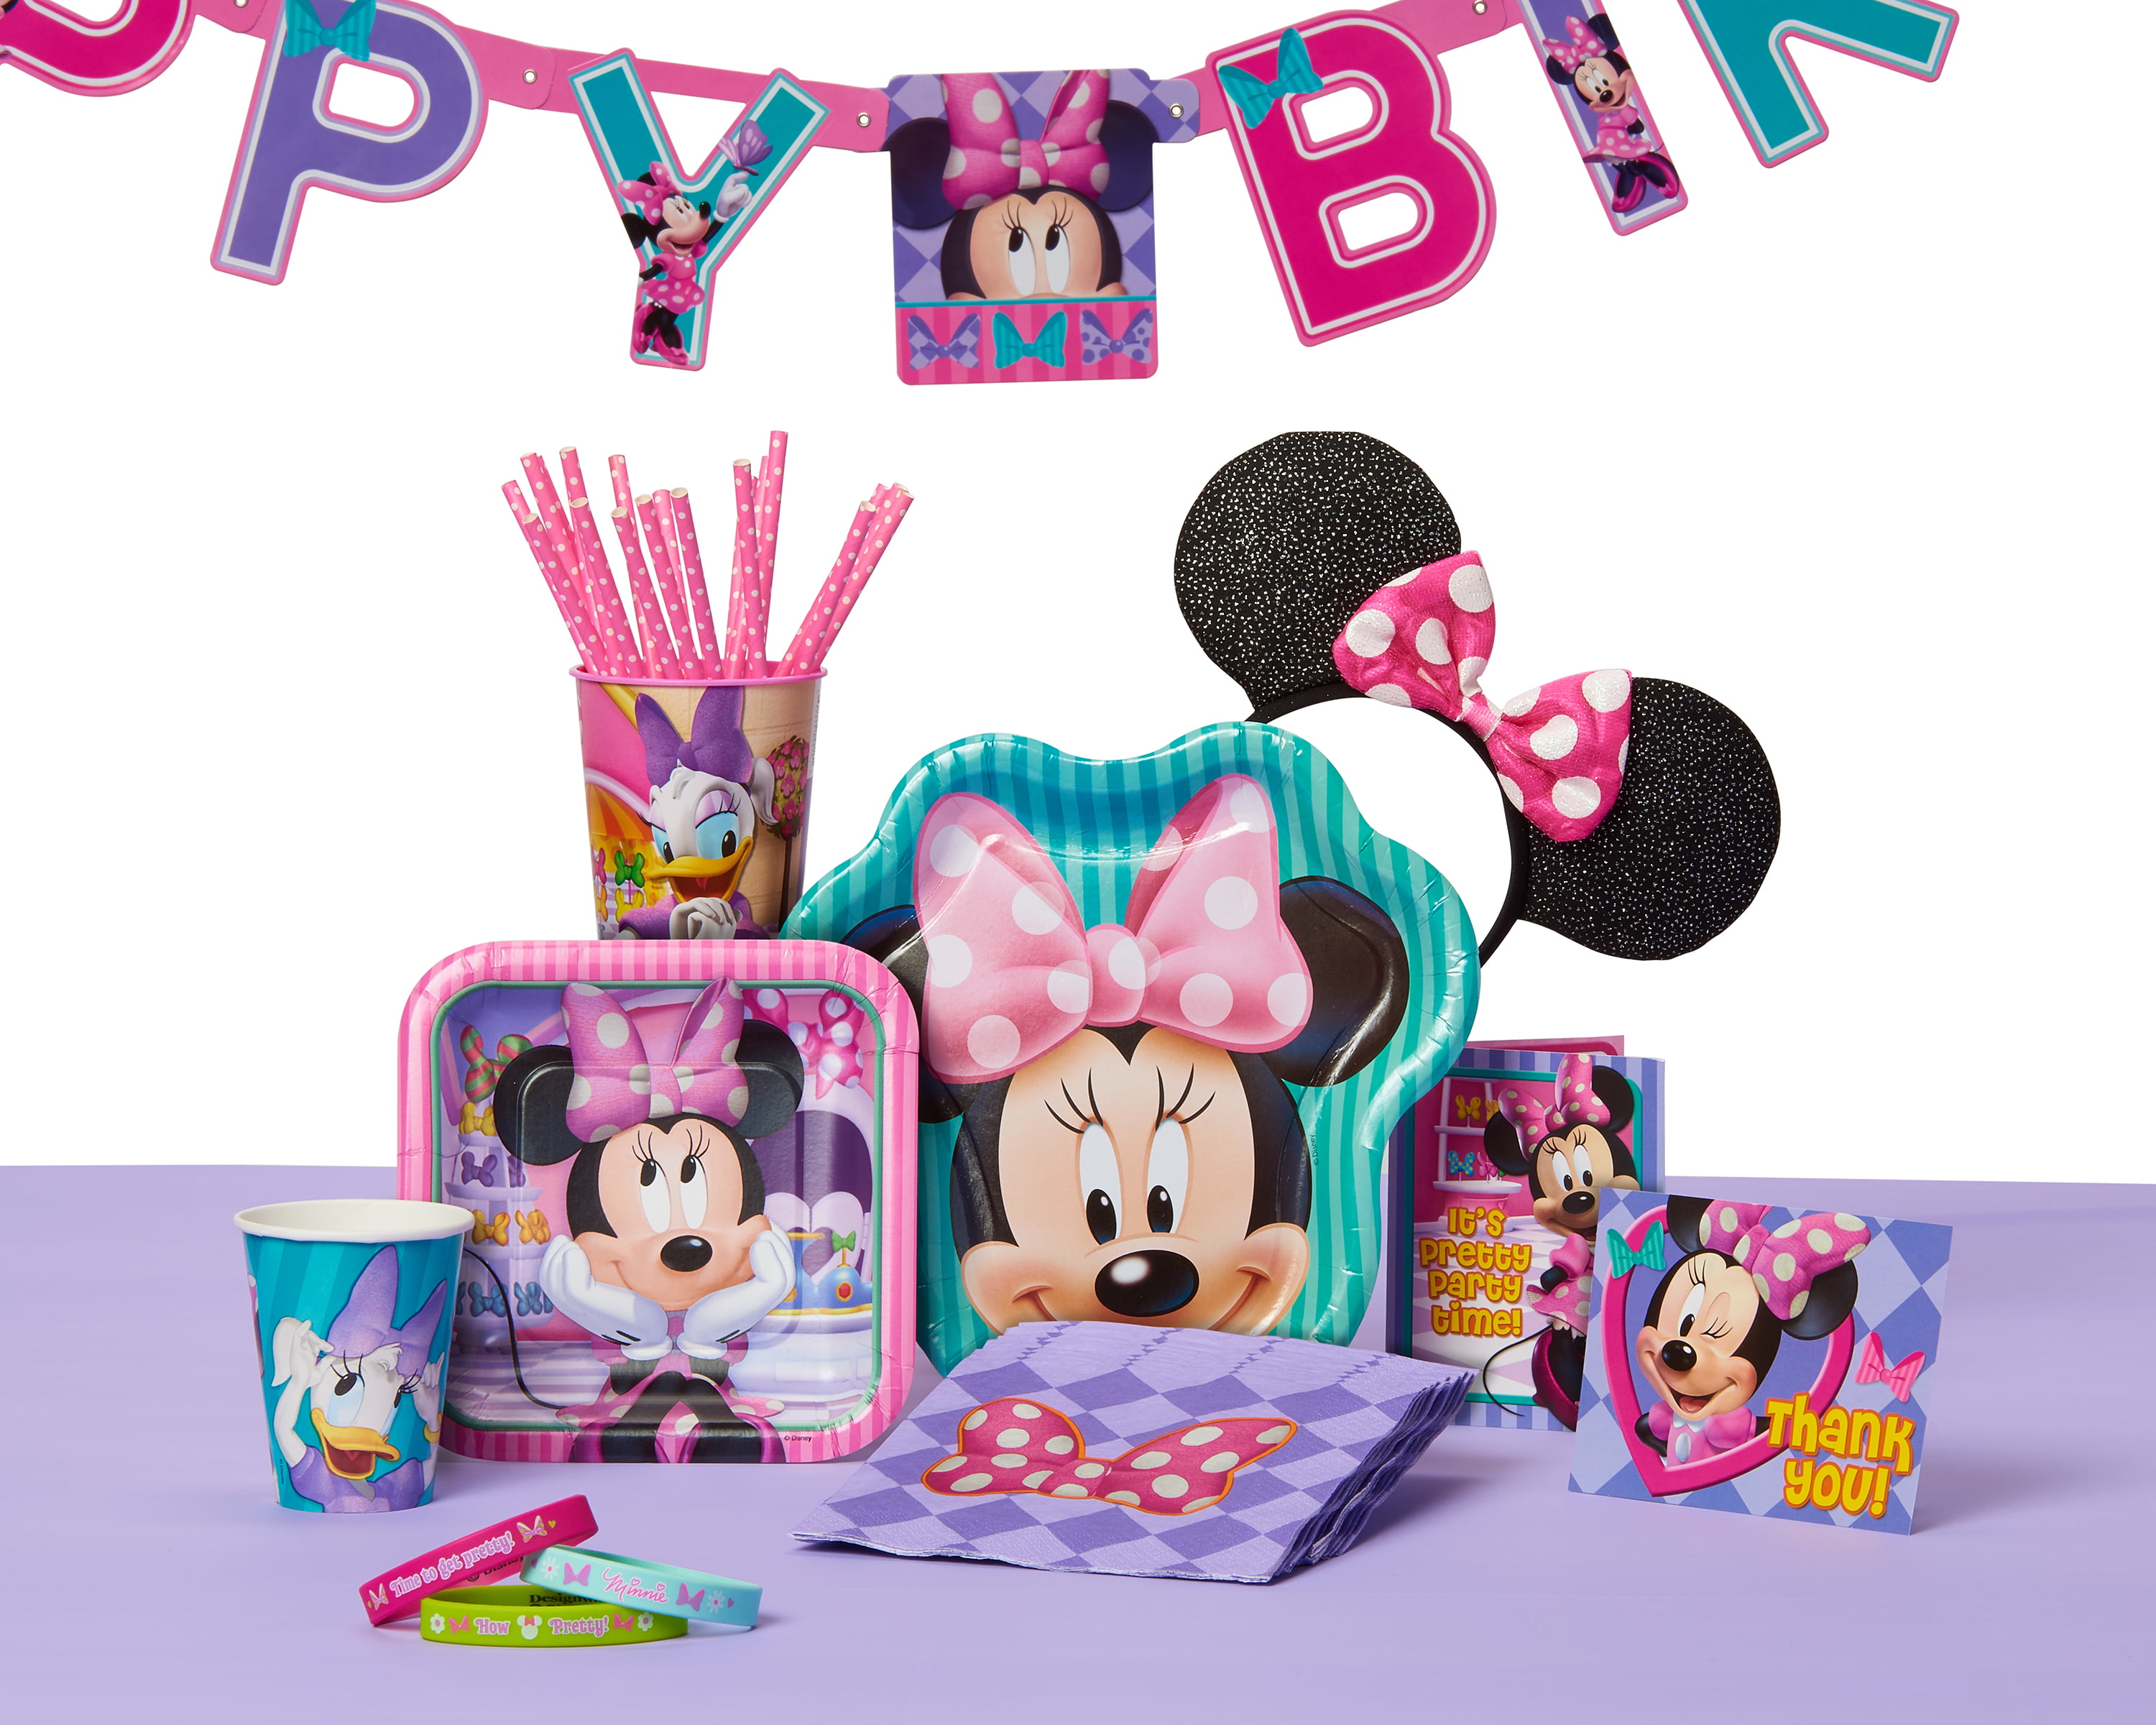  Minnie  Mouse  Party  Supplies  Walmart com